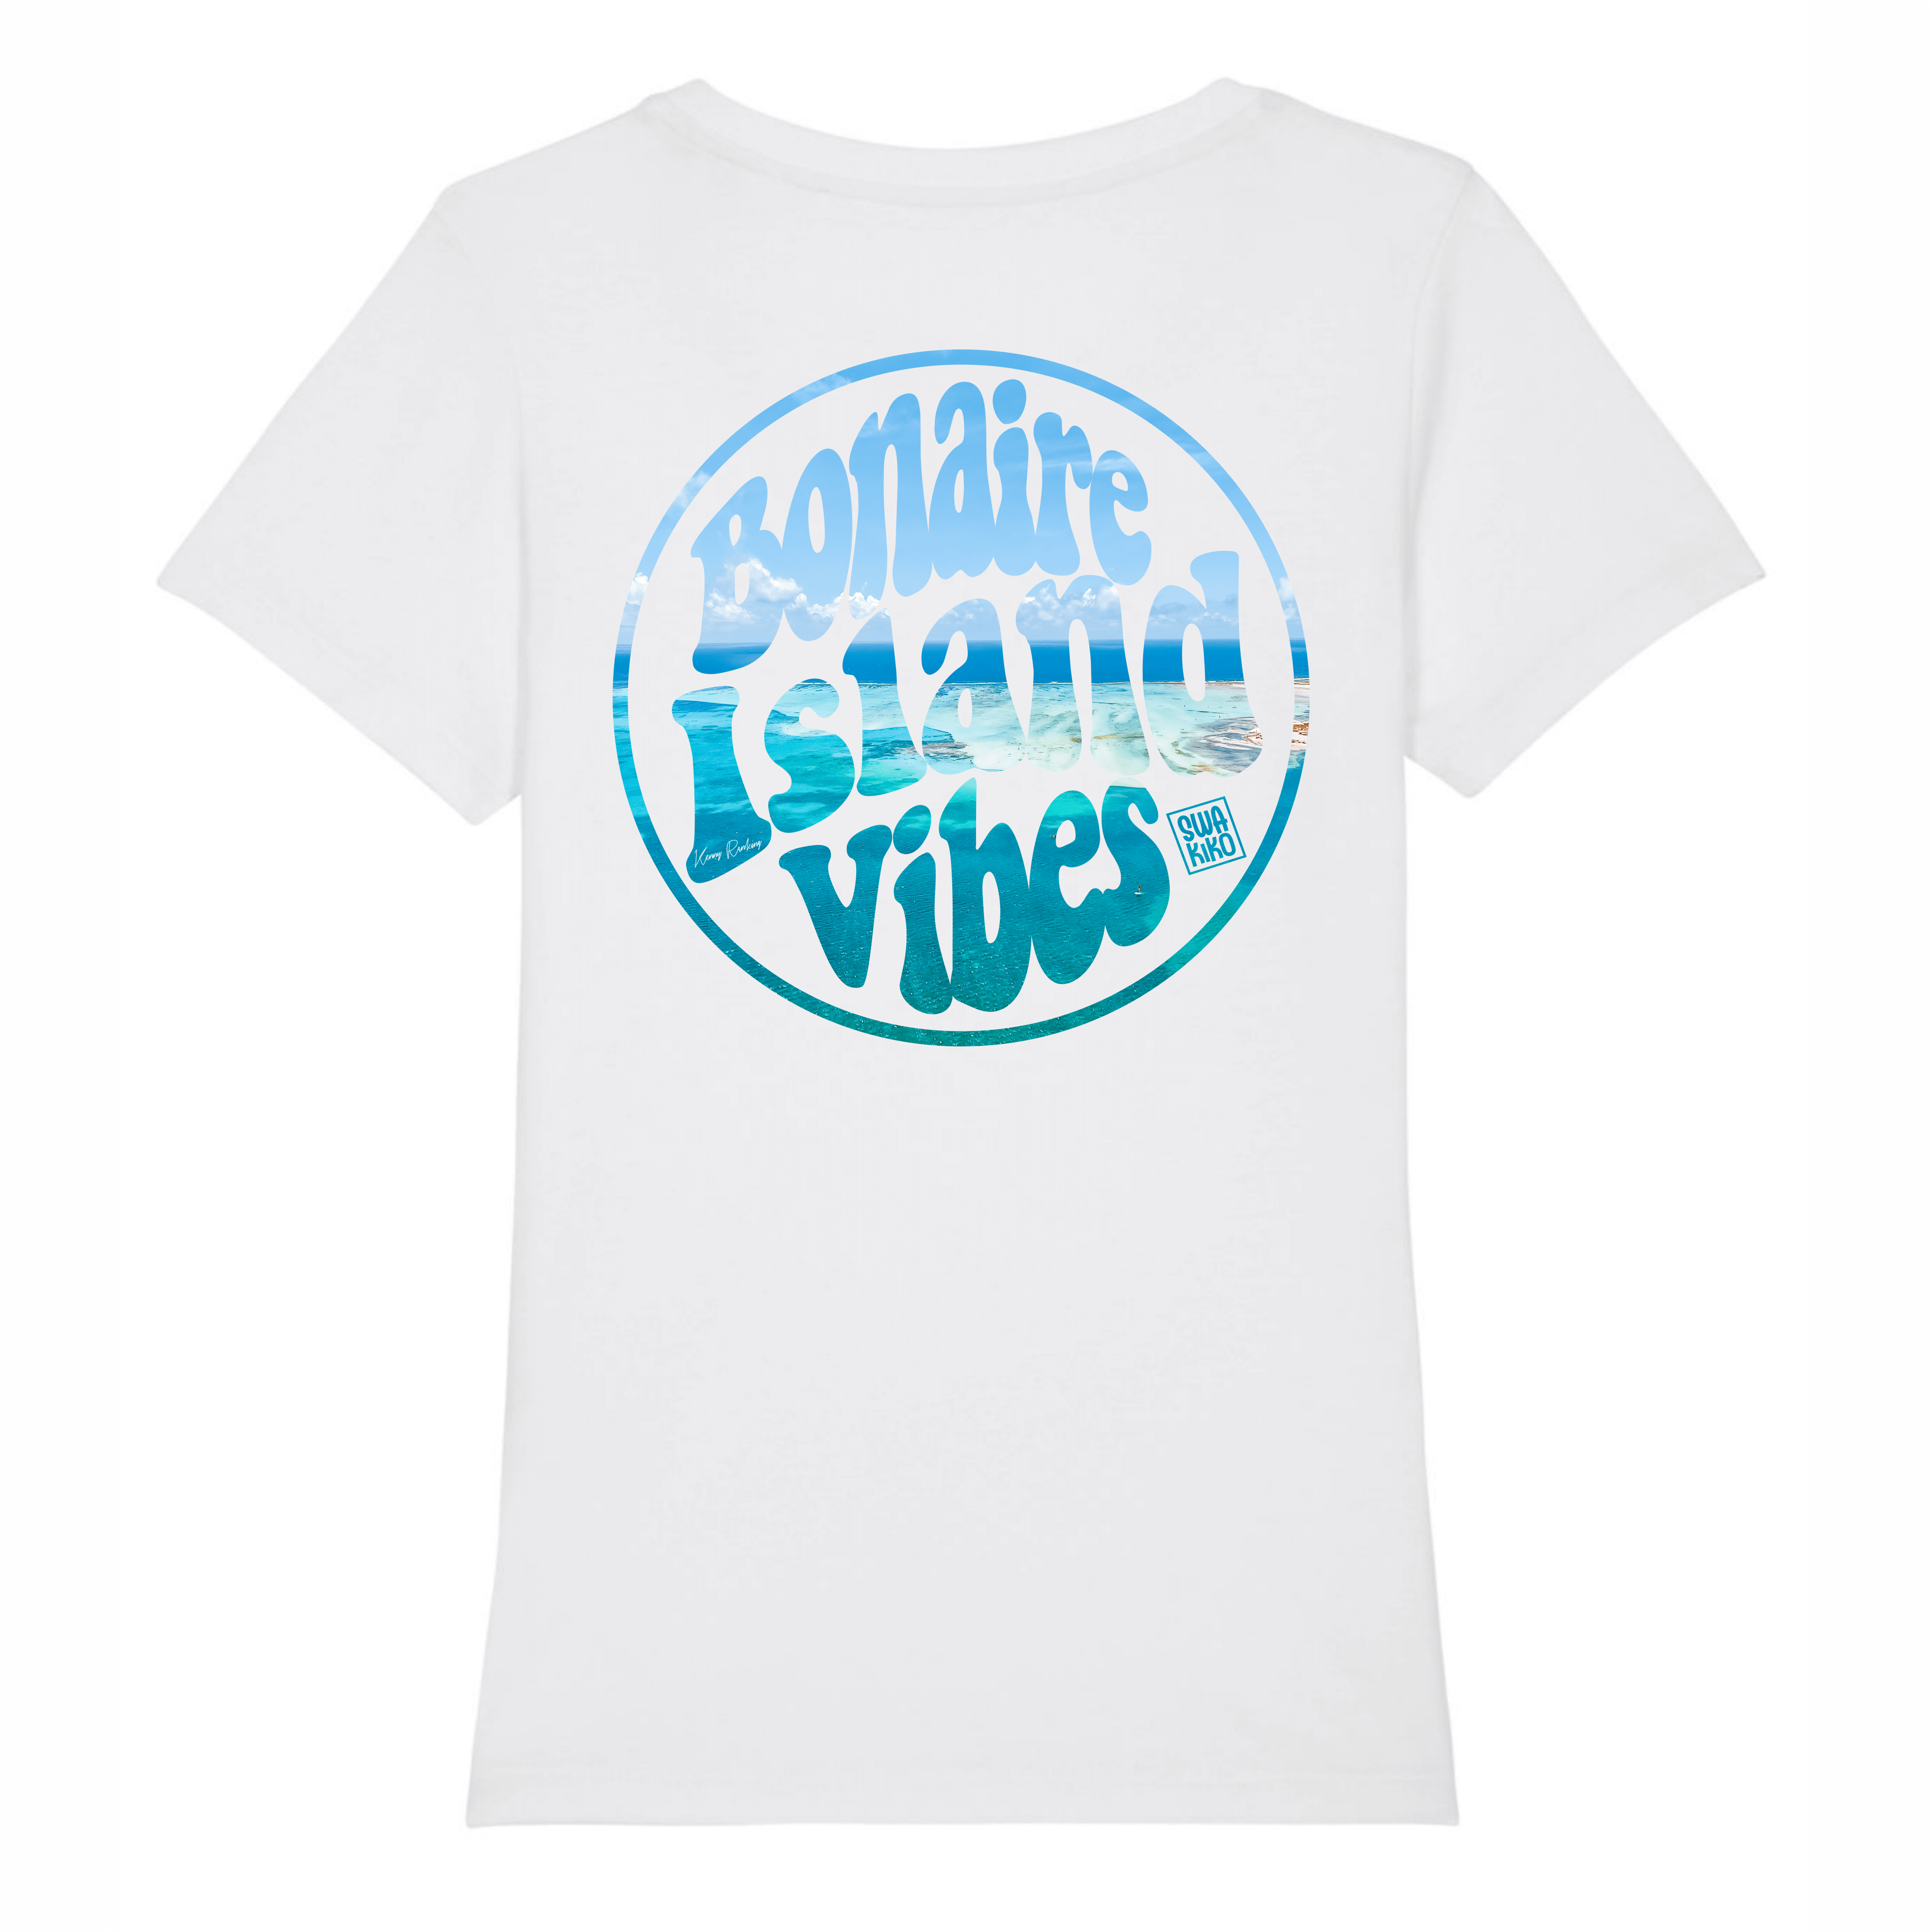 Bonaire Island Vibes, white T-shirt women